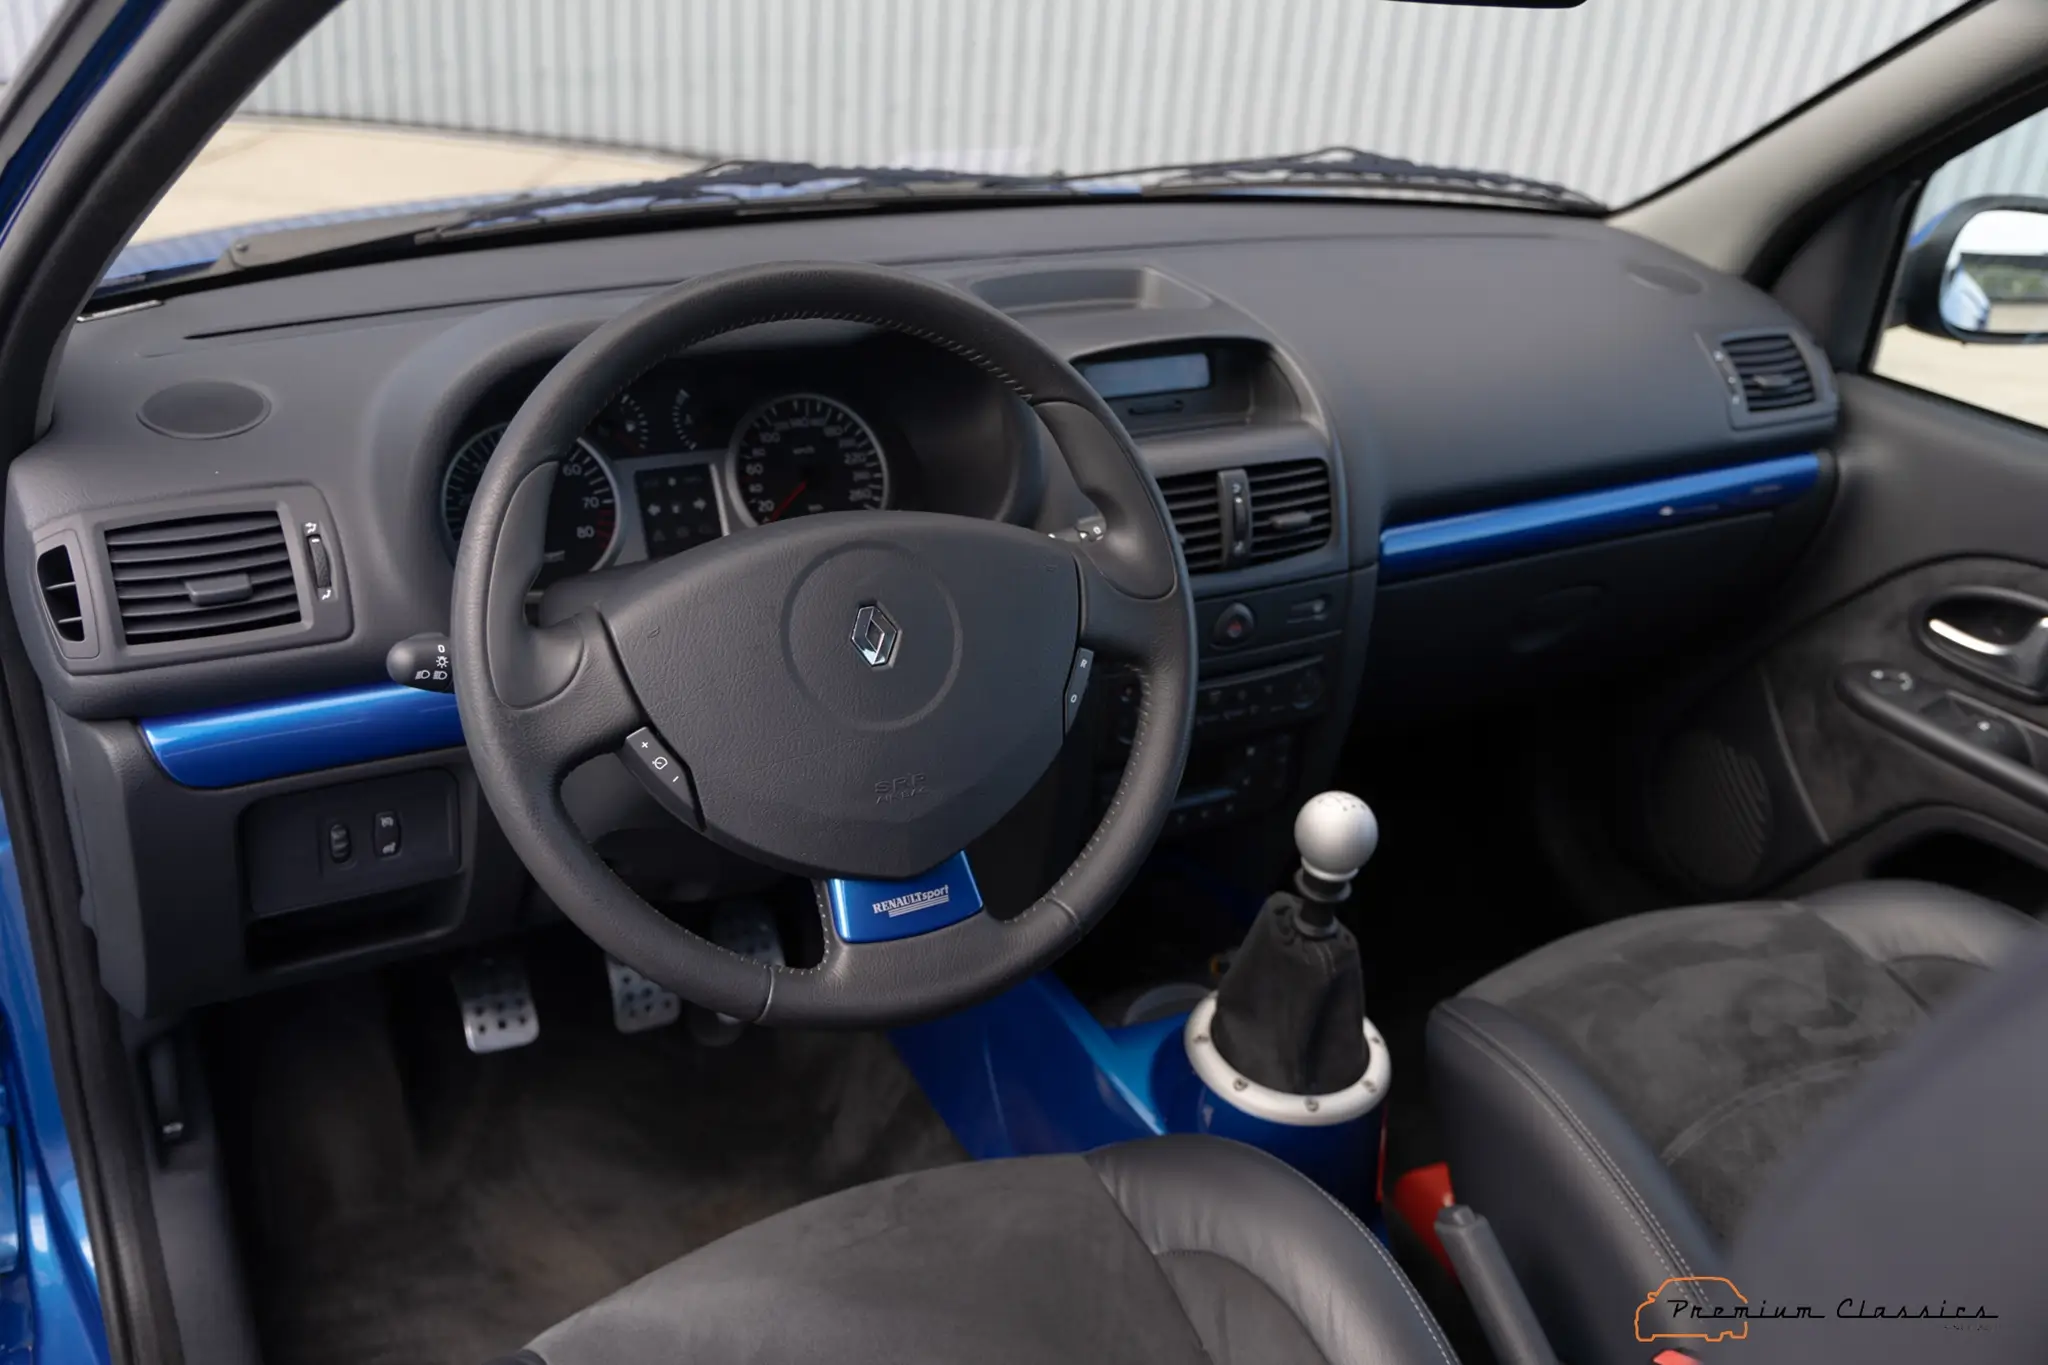 Renault Clio V6 - interior